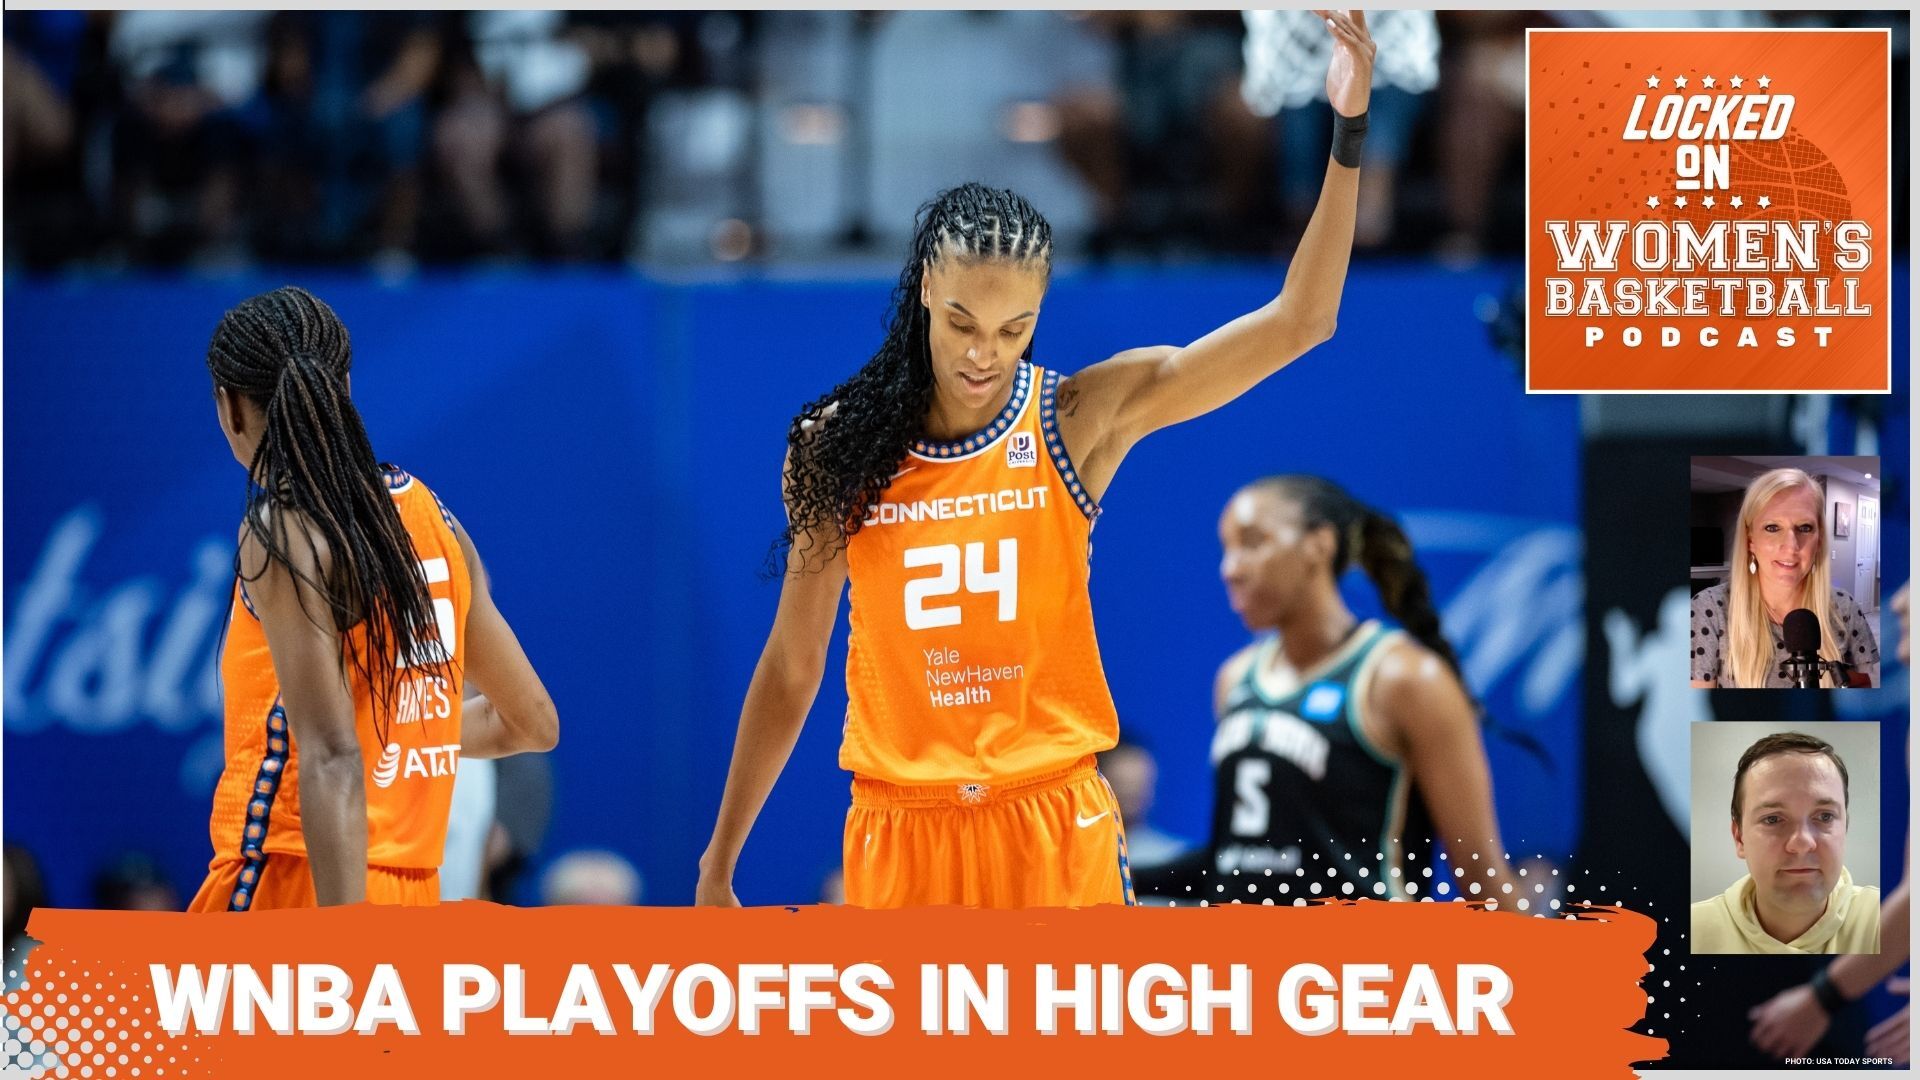 Women's Basketball Daily Briefing: Atlanta Dream crush Aces